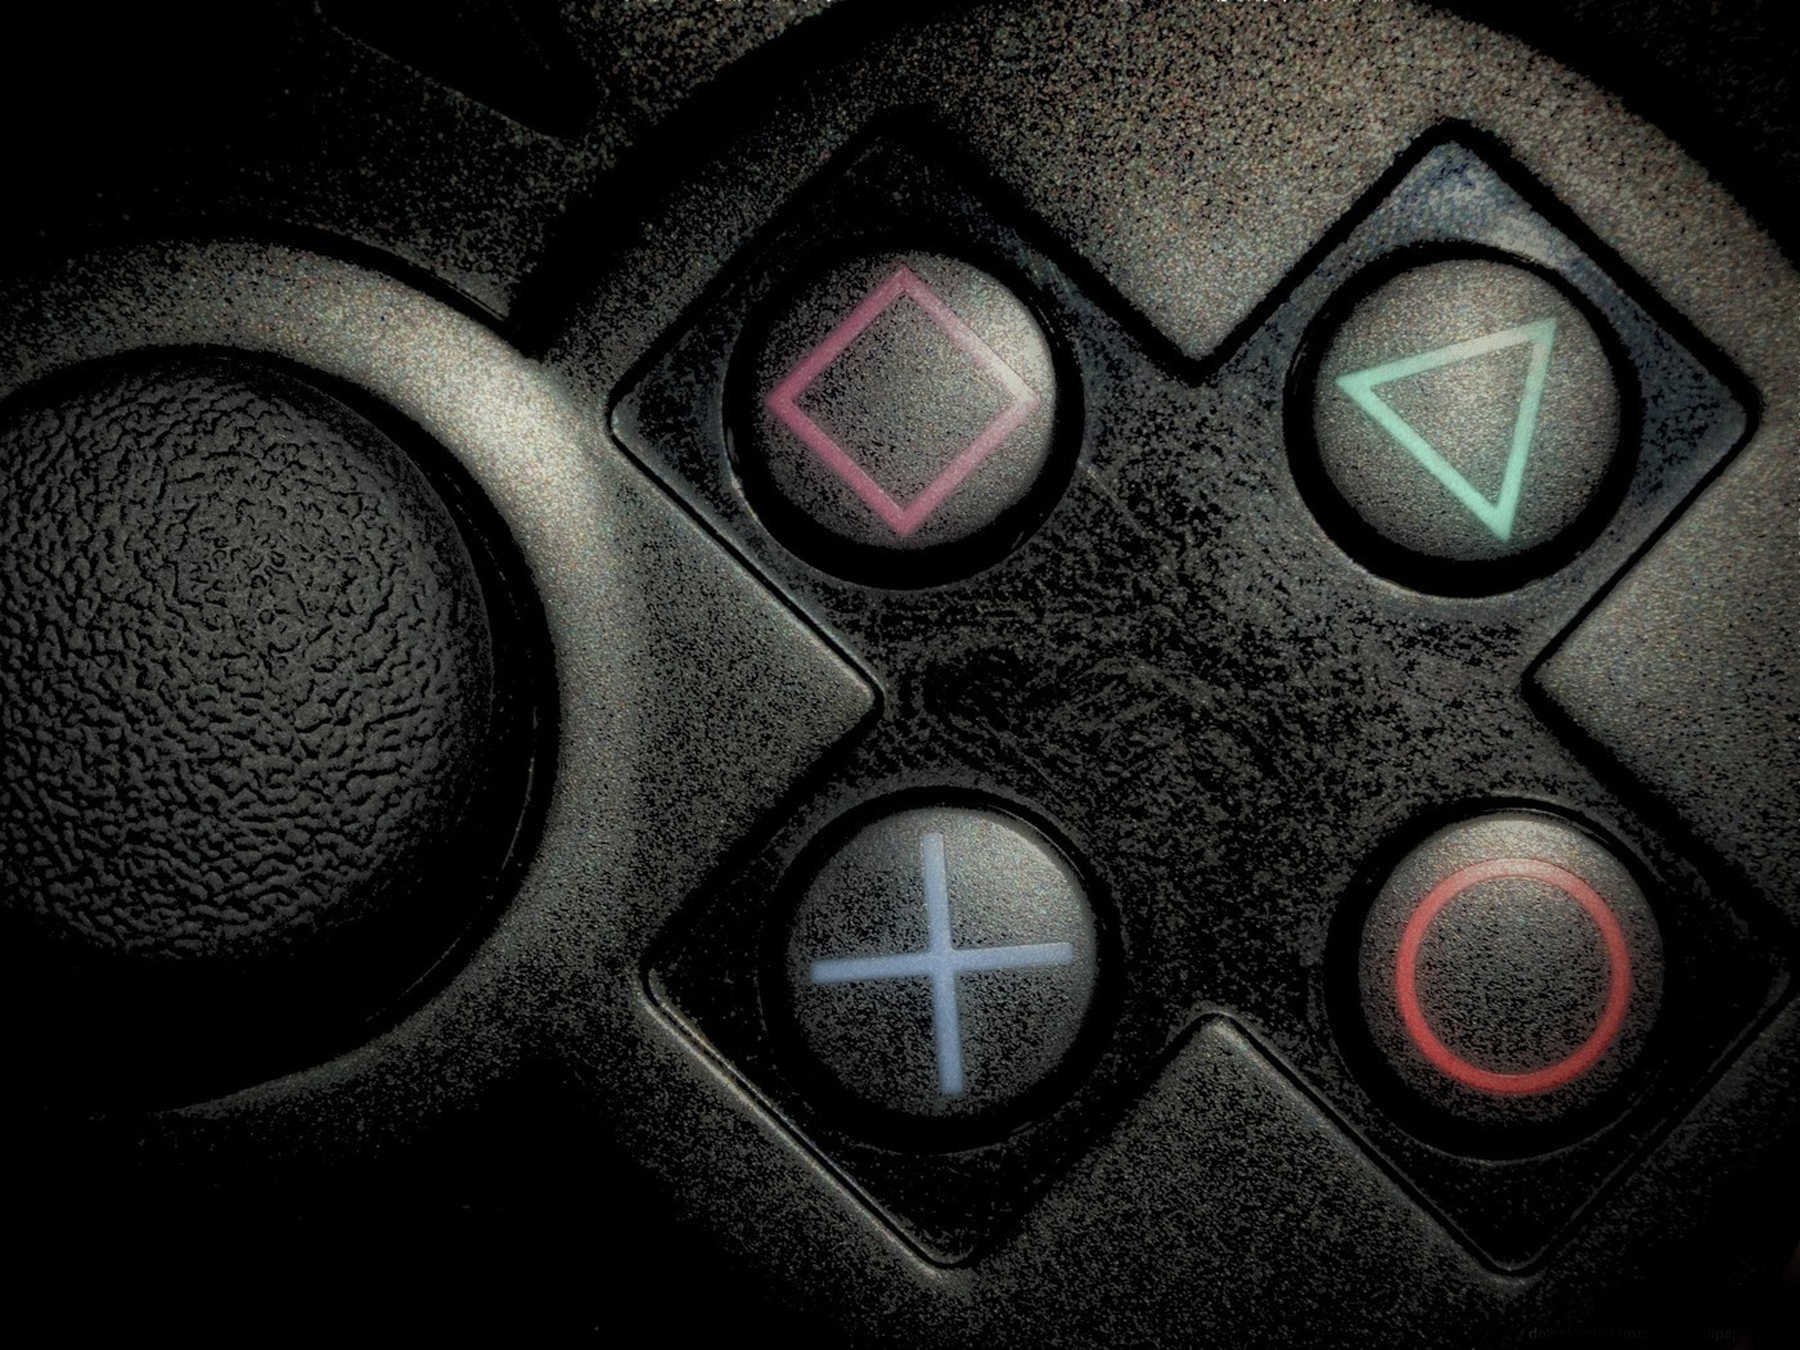 PlayStation Controller Wallpaper